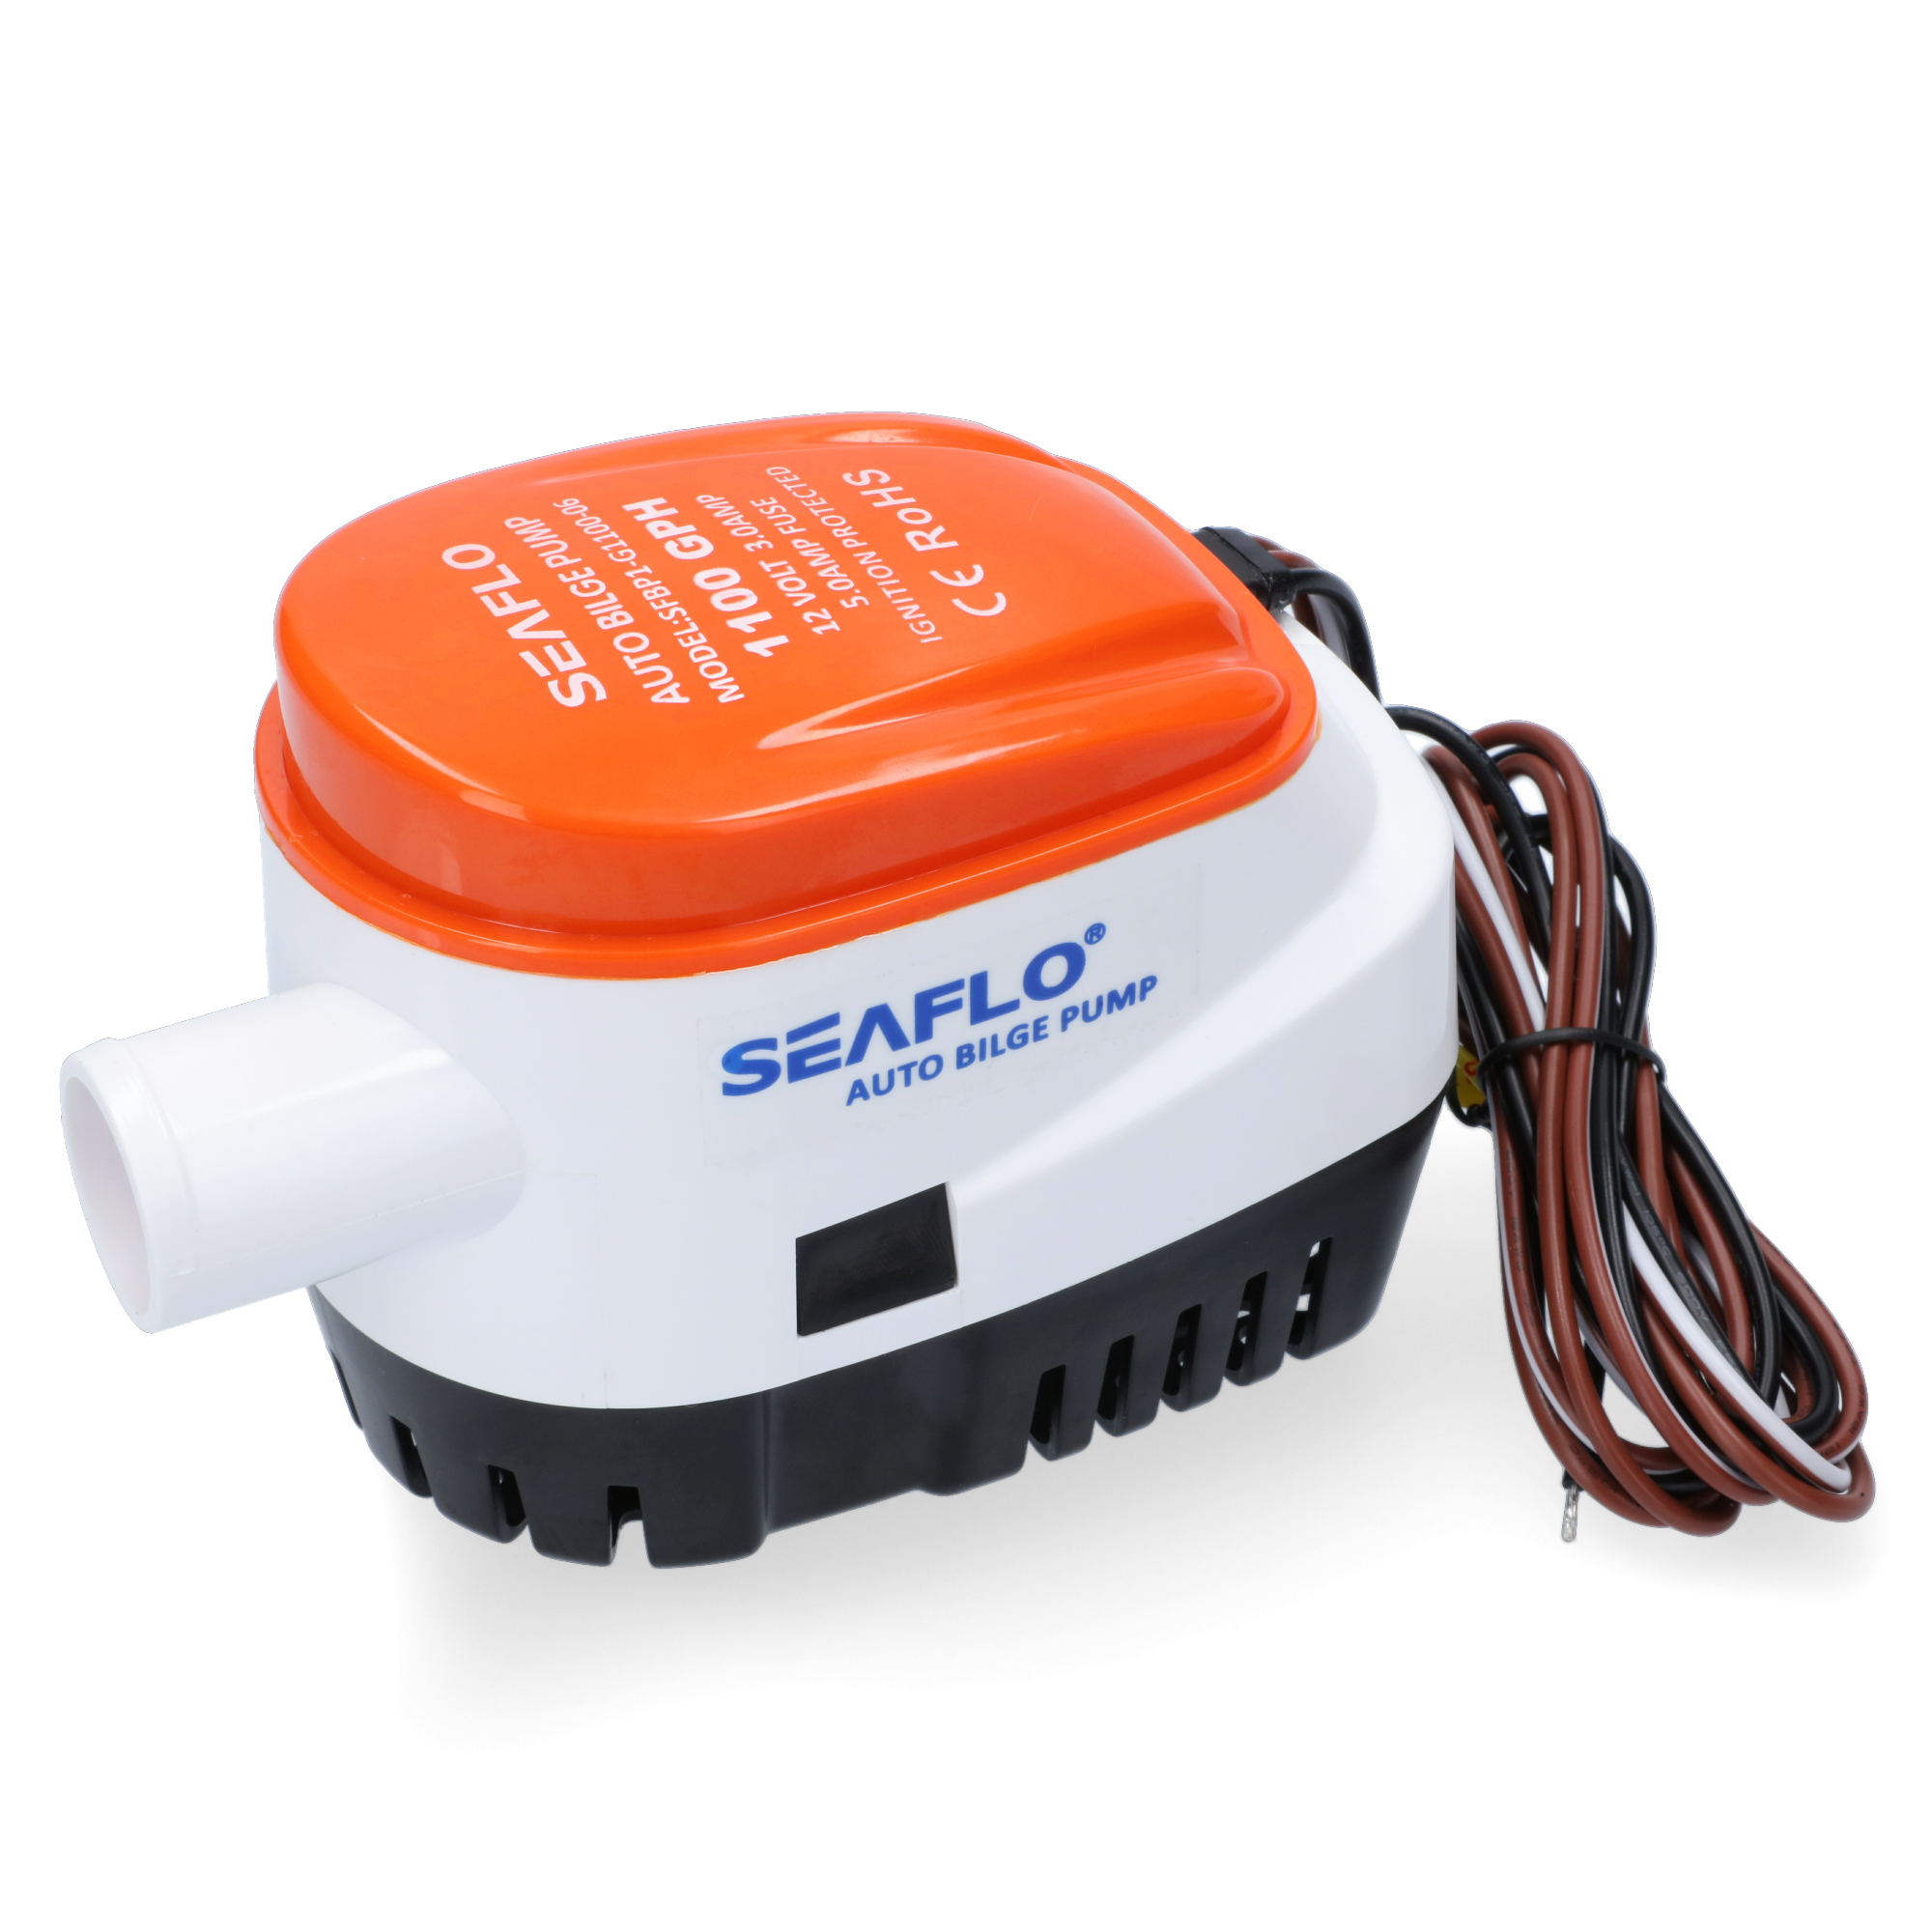 SEAFLO ® Automatik Bilge Pumpe 12 V Sahara 1100